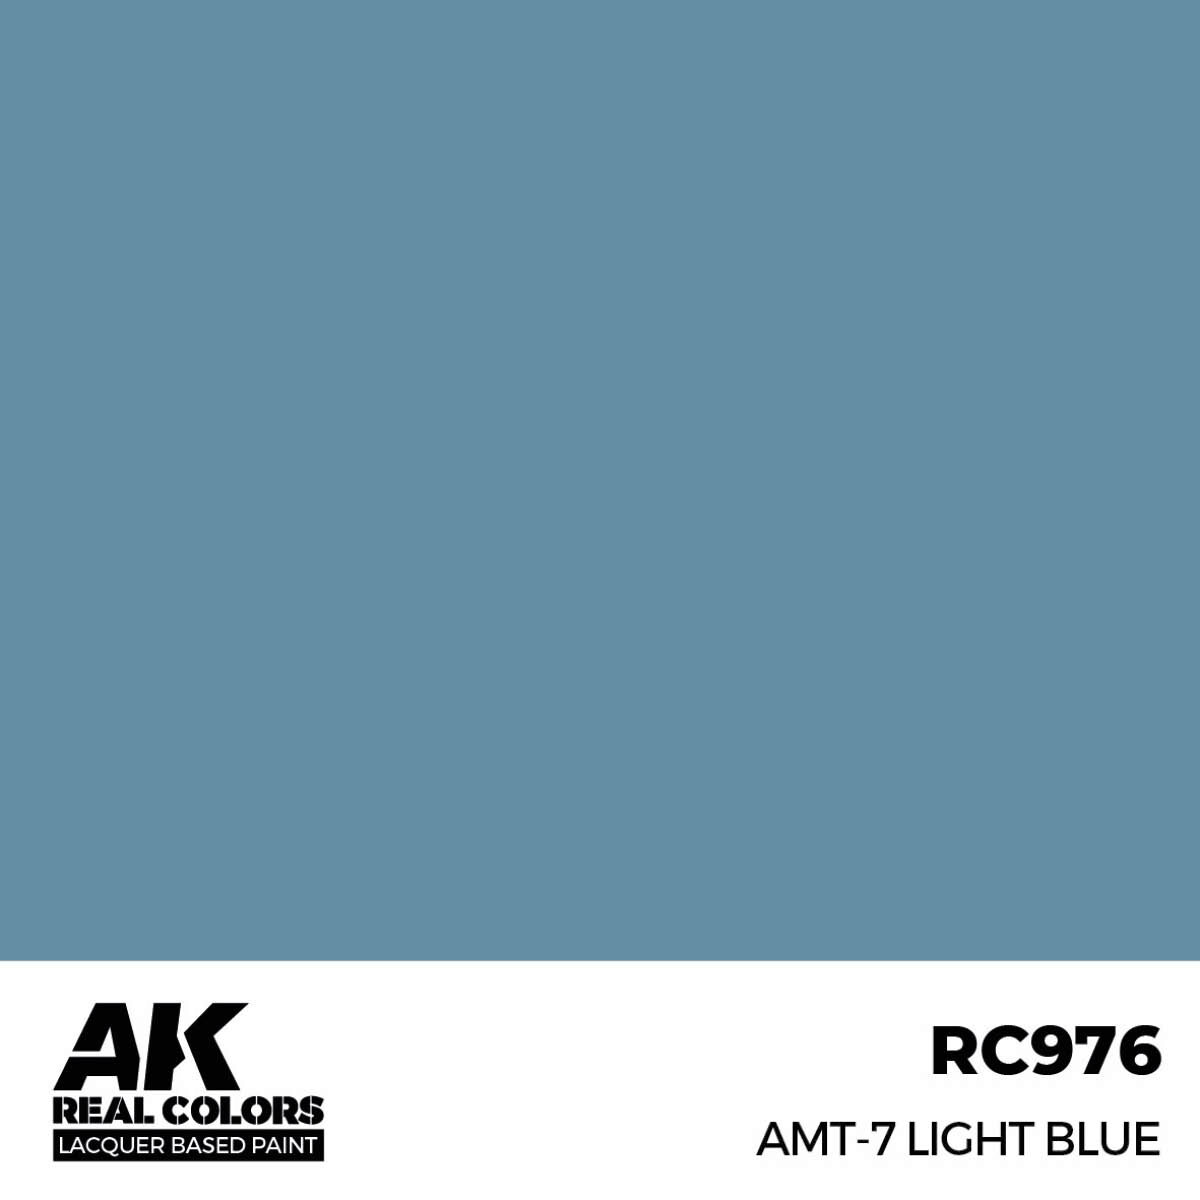 AK RC976 Real Colors AMT-7 Light Blue 17 ml.